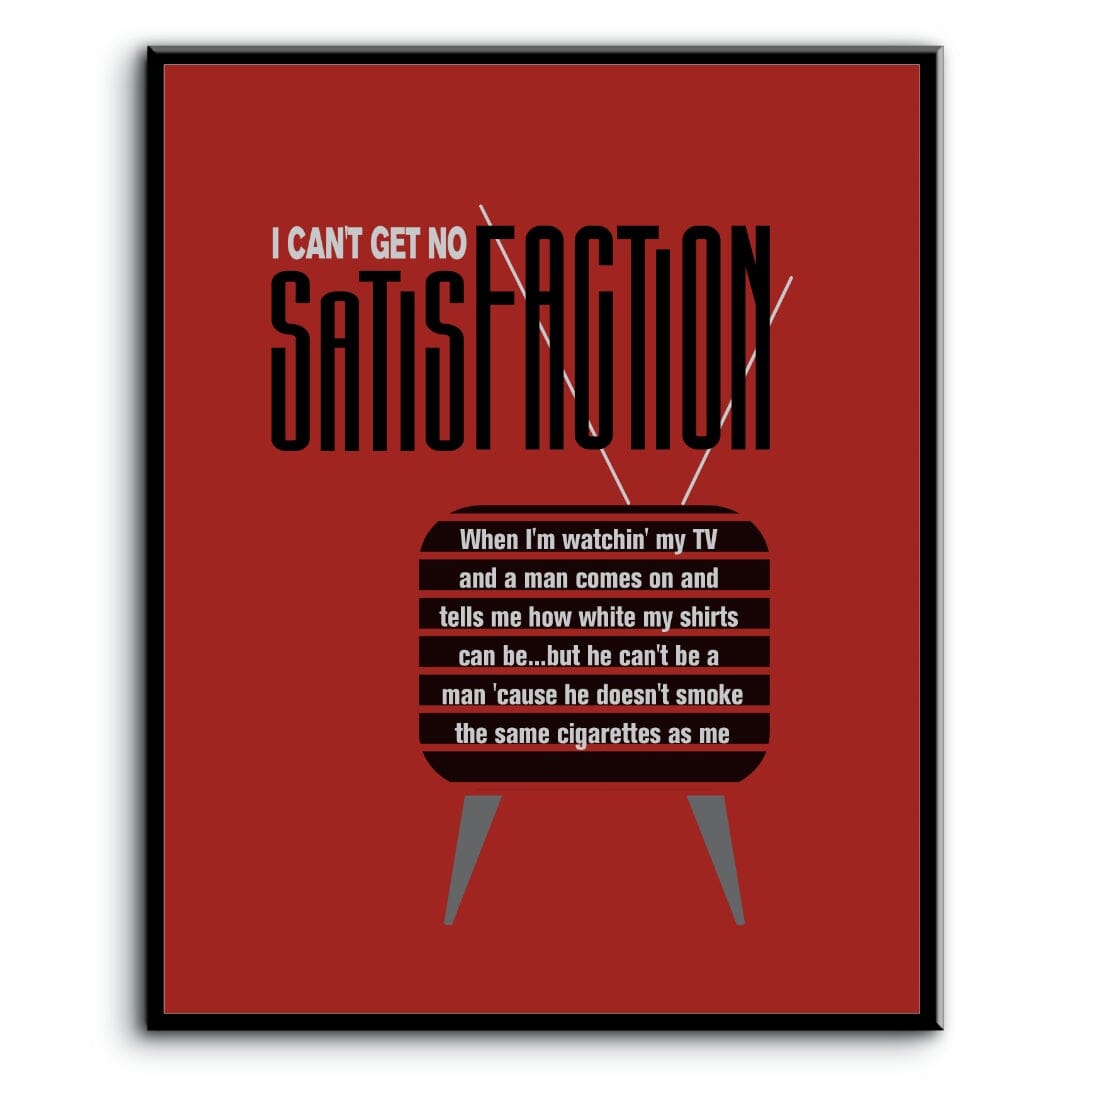 I Can't Get No Satisfaction by Rolling Stones - Lyric Print Song Lyrics Art Song Lyrics Art 8x10 Plaque Mount 